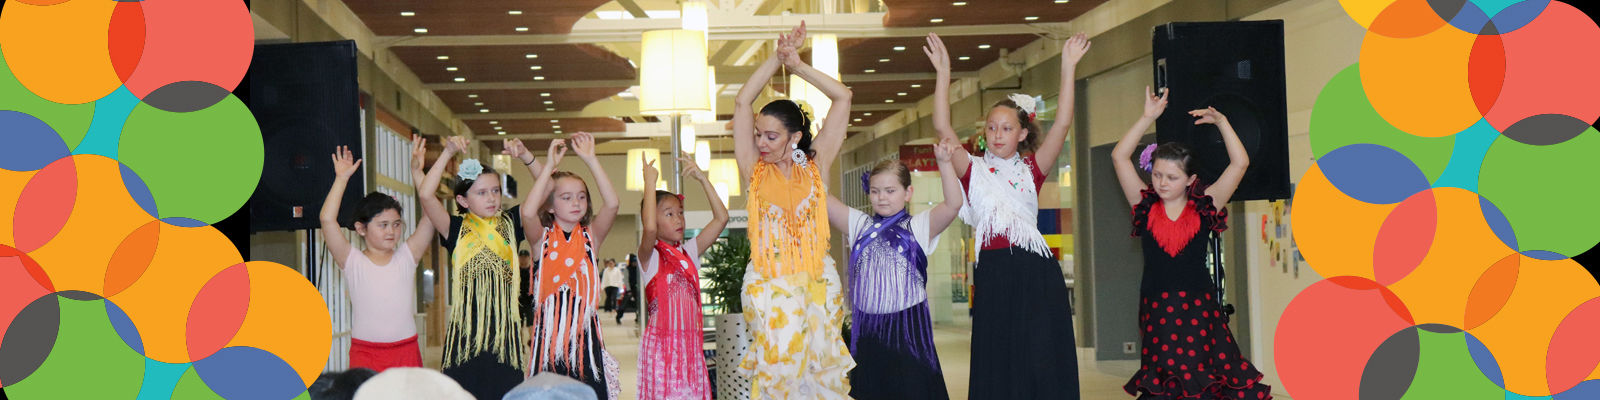 Participants dance in Eastside Welcoming Week 2019.